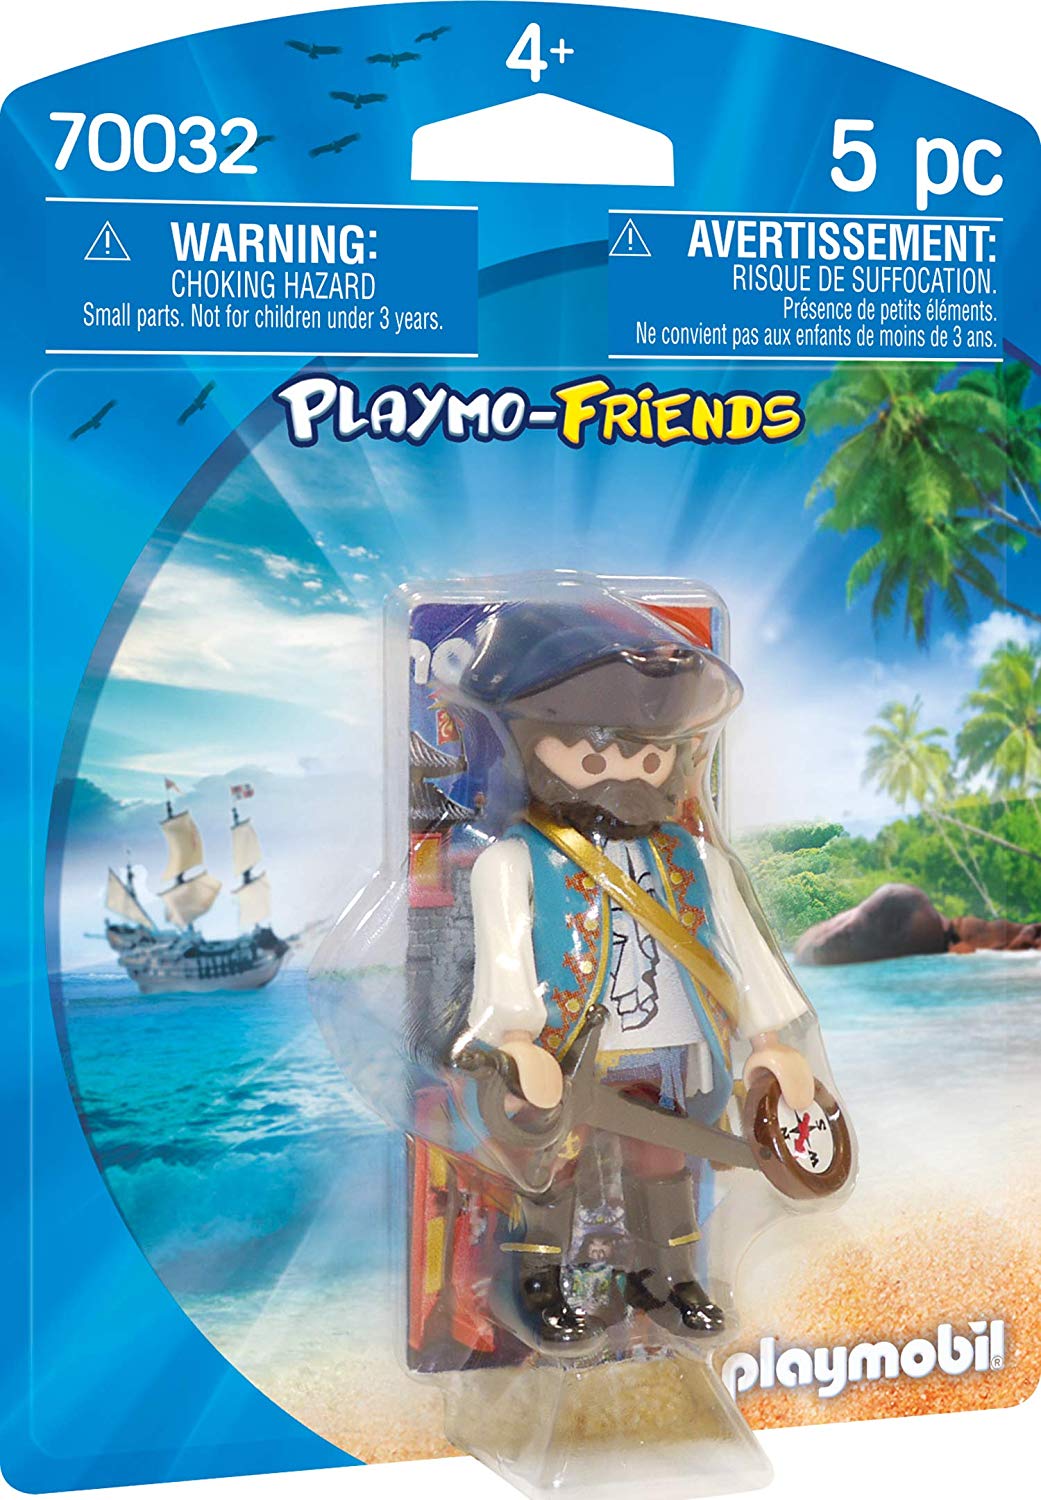 Playmobil 70032 Playmo-Friends Pirate Multi-Coloured